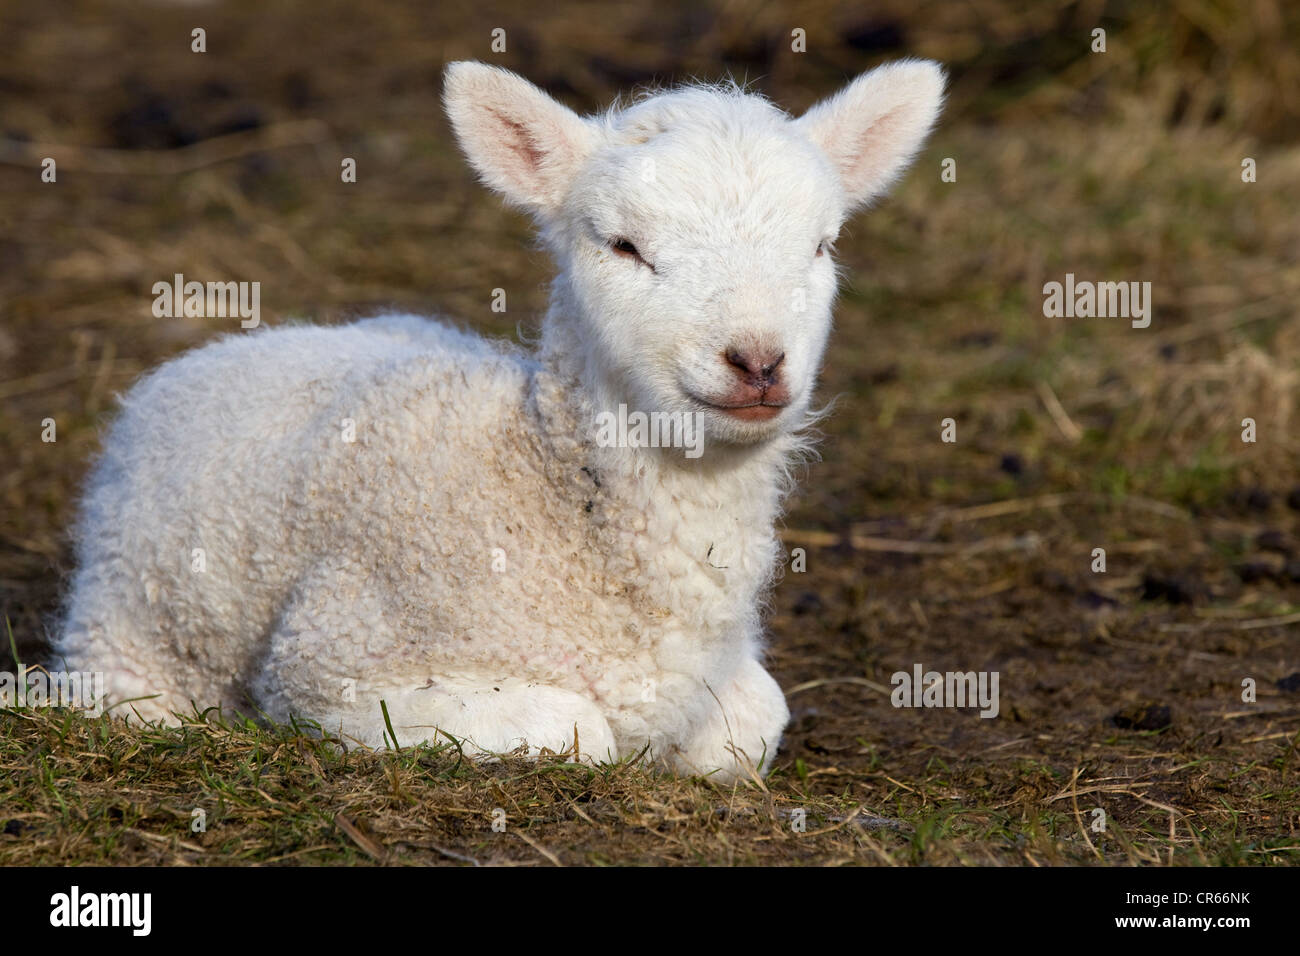 Lamb, Paschal Lamb, lying down, North Friesland, Germany, Europe Stock Photo